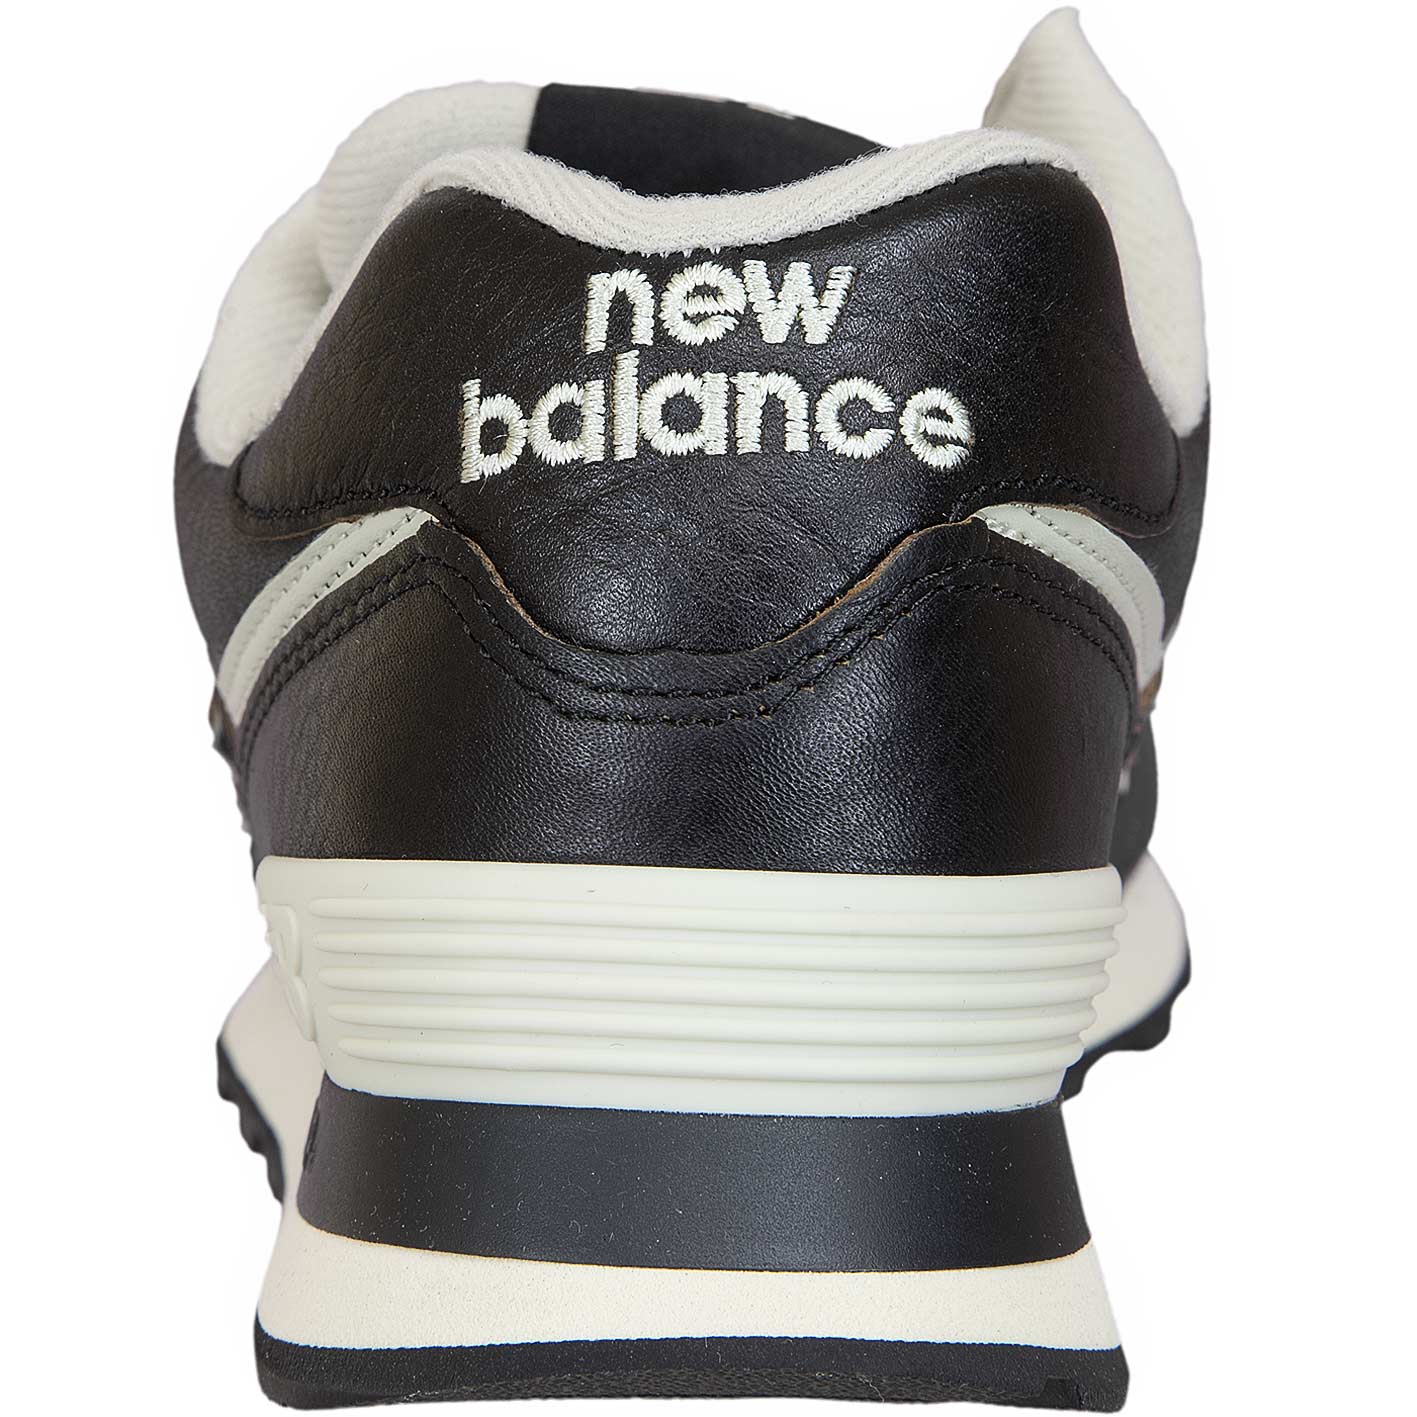 ☆ New Balance Sneaker 574 Leder/Synthetik schwarz - hier bestellen!